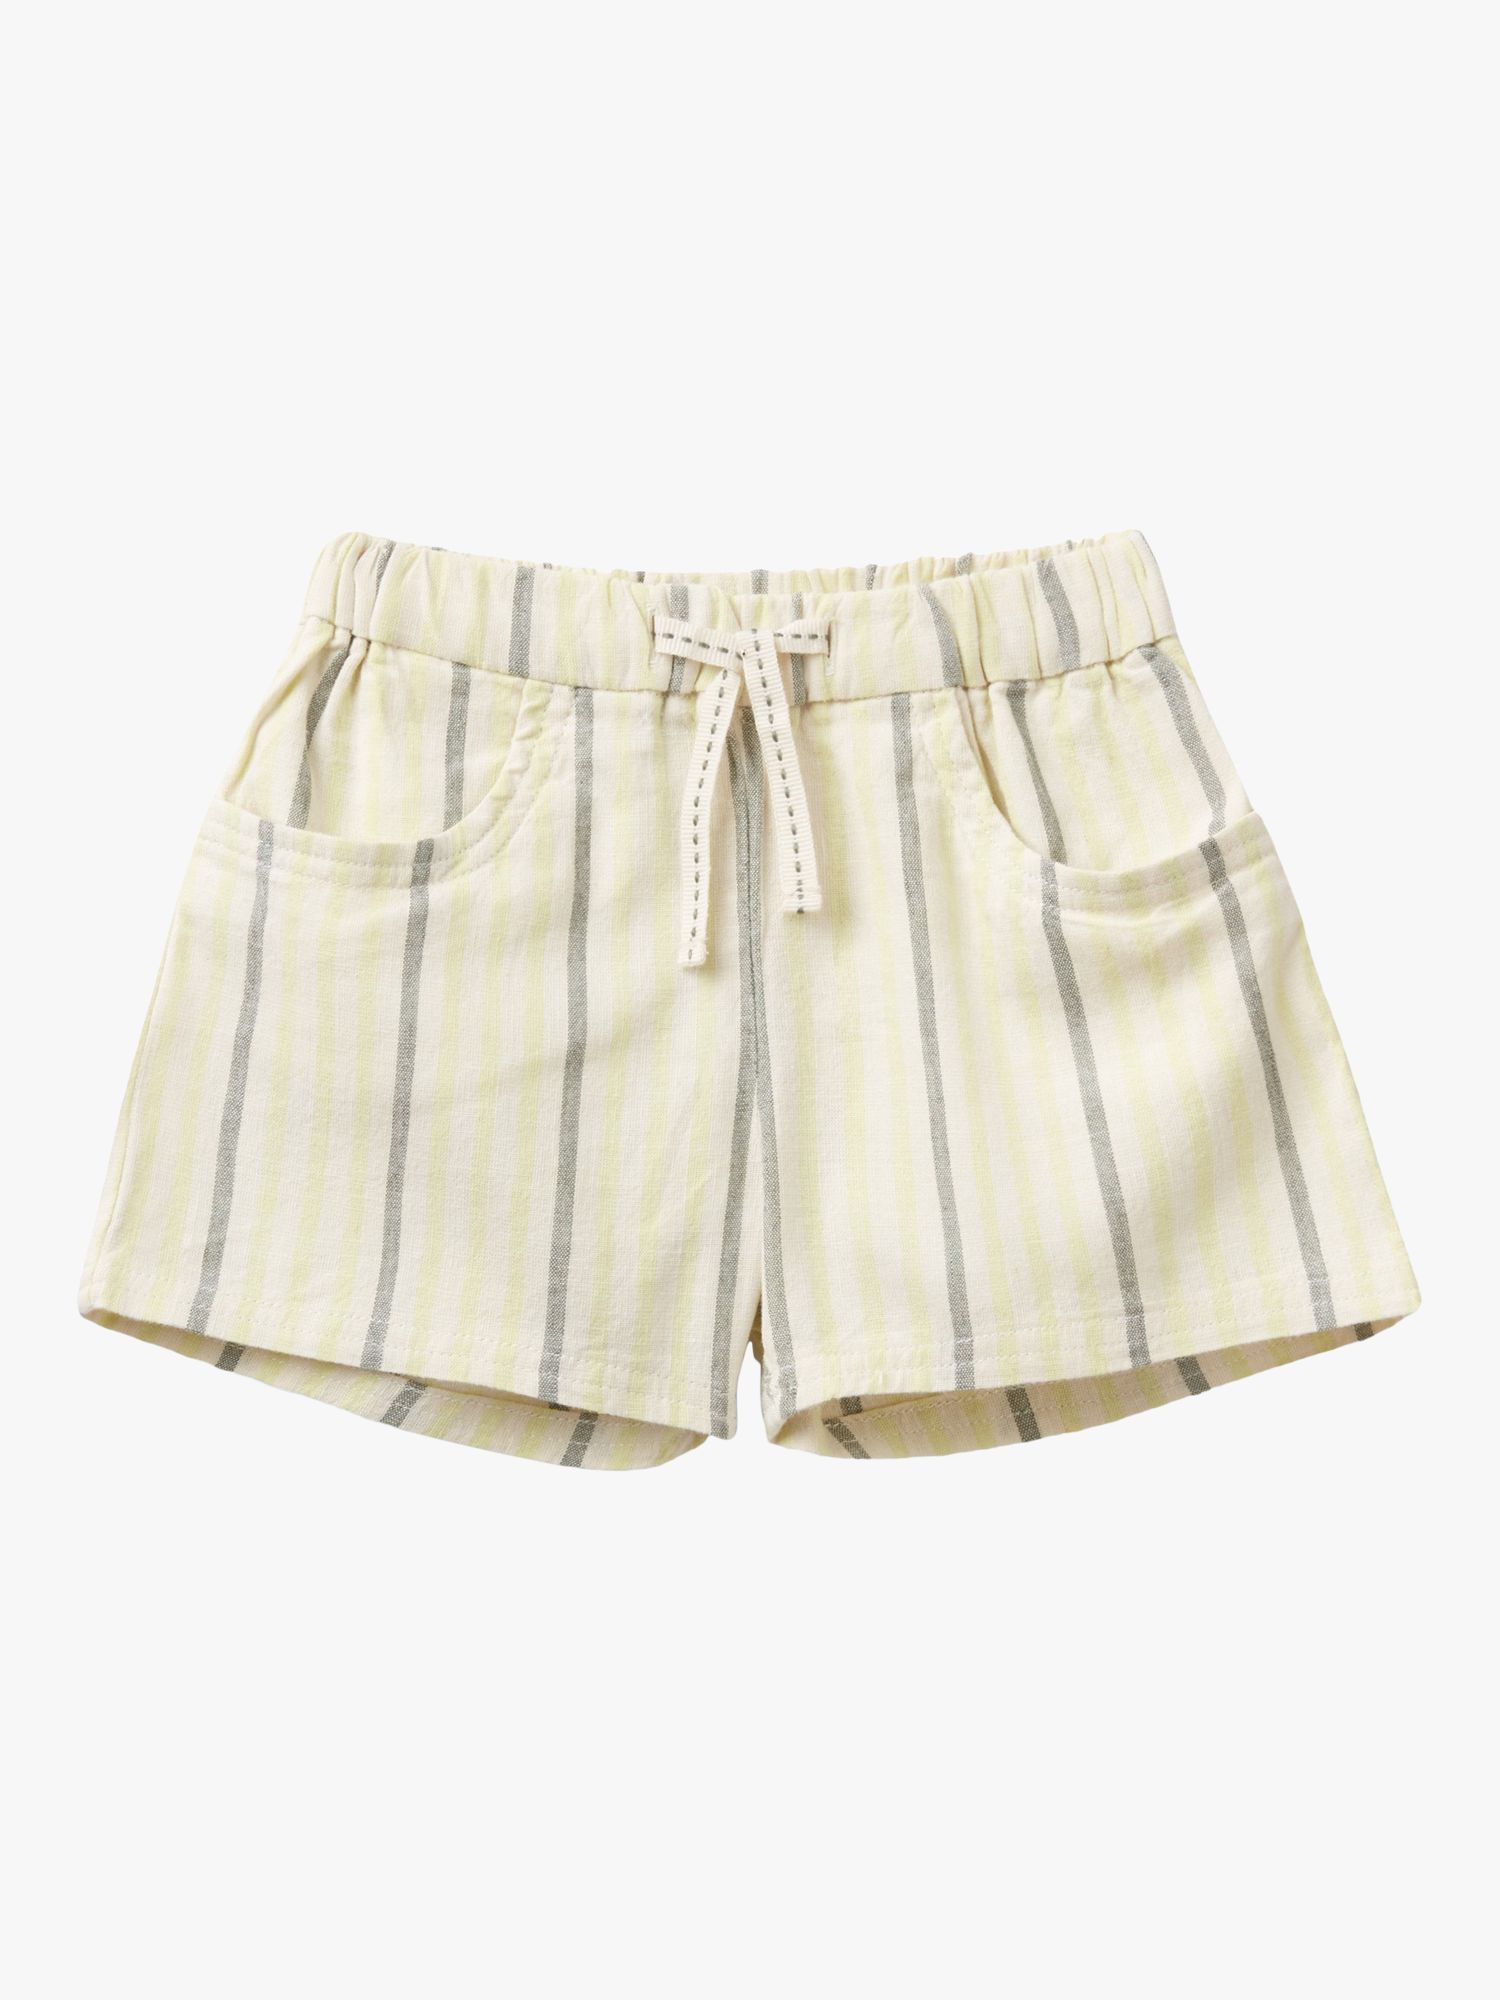 Benetton Baby Stripe Drawstring Shorts, Off White/Multi, 0-3 months